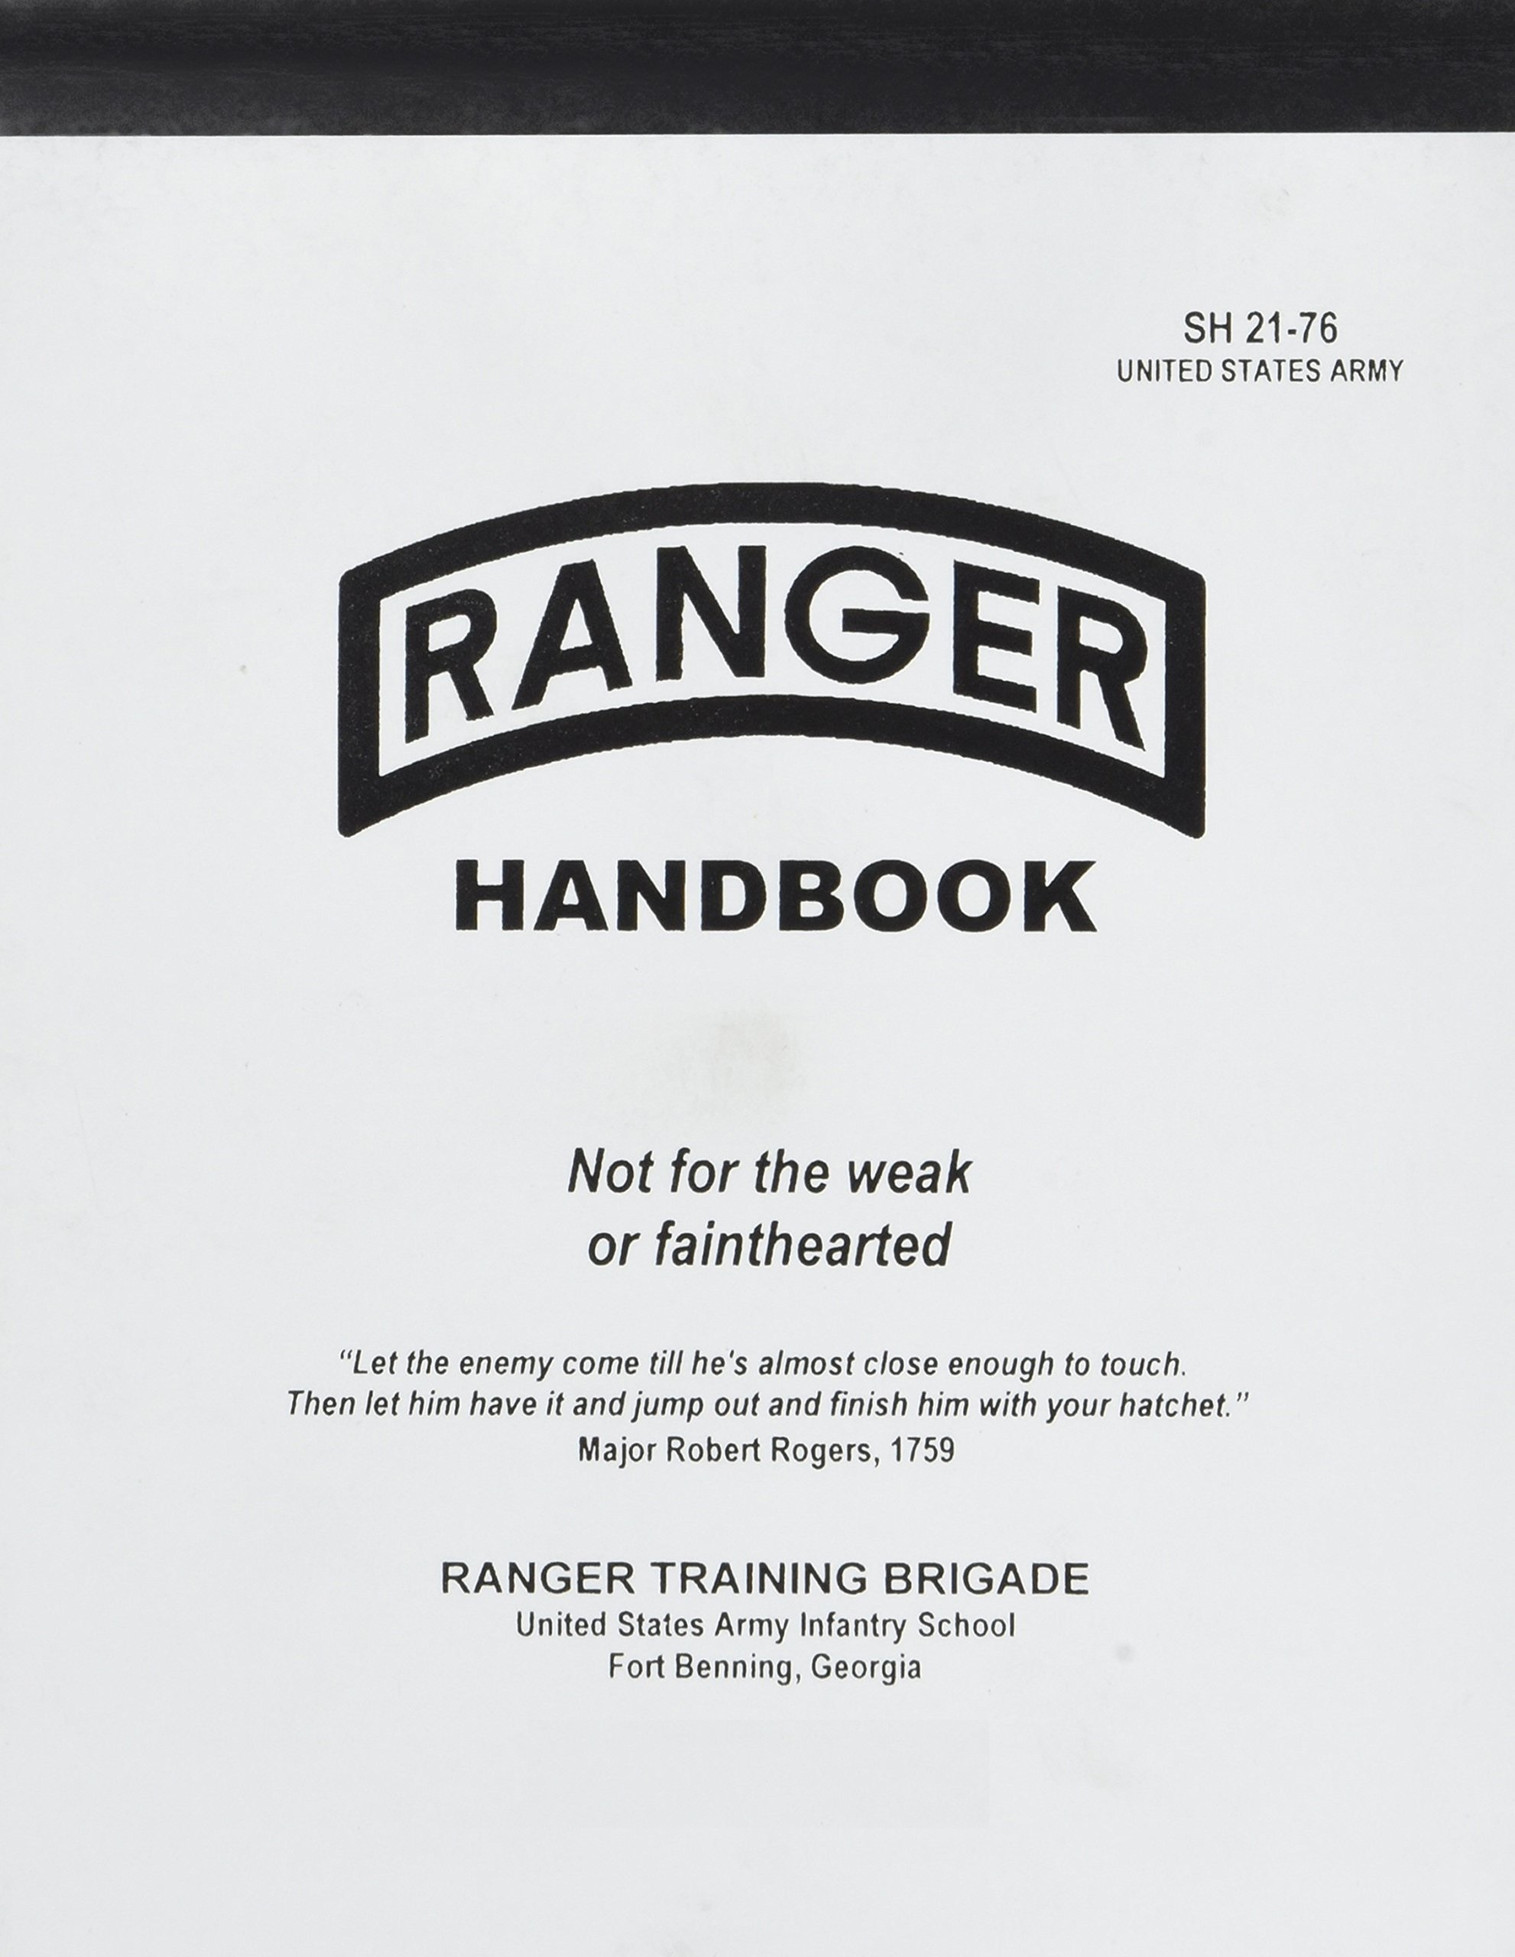 Ranger Handbook "Not for the weak or fainthearted"